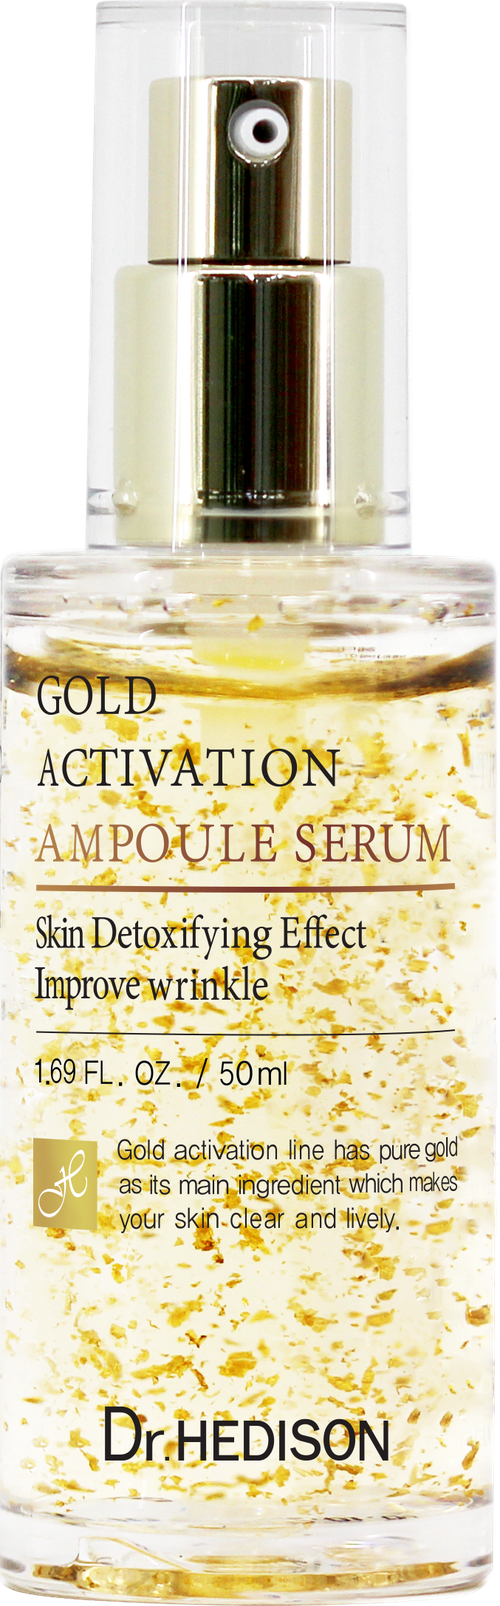 Сыворотка для лица Dr. Hedison Gold Activation Ampoule Serum